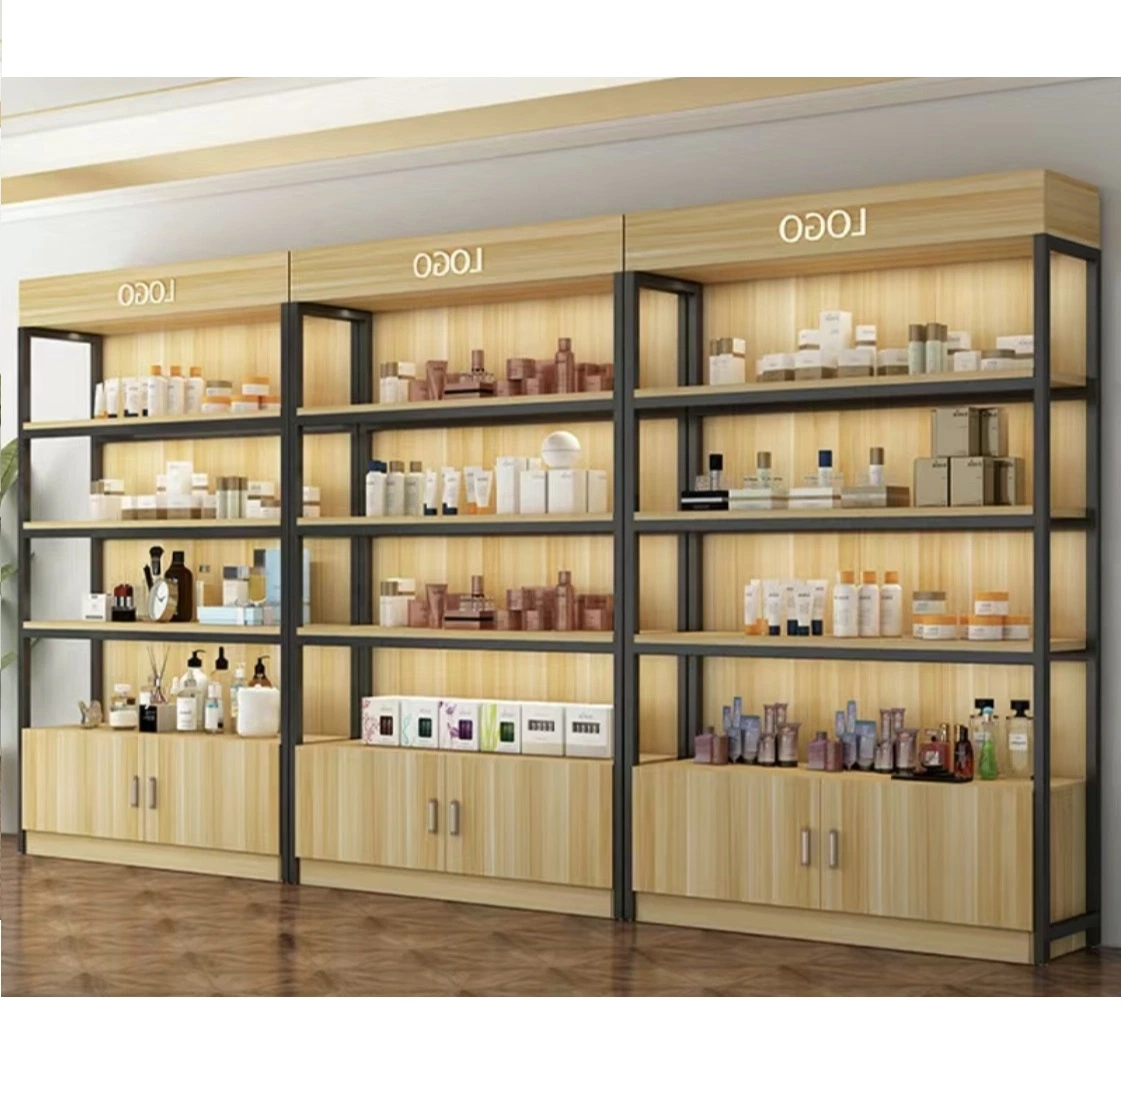 Wholesale Cabinet Rack Shop Design Ideas Store Fixture Cosmetics Display Rack